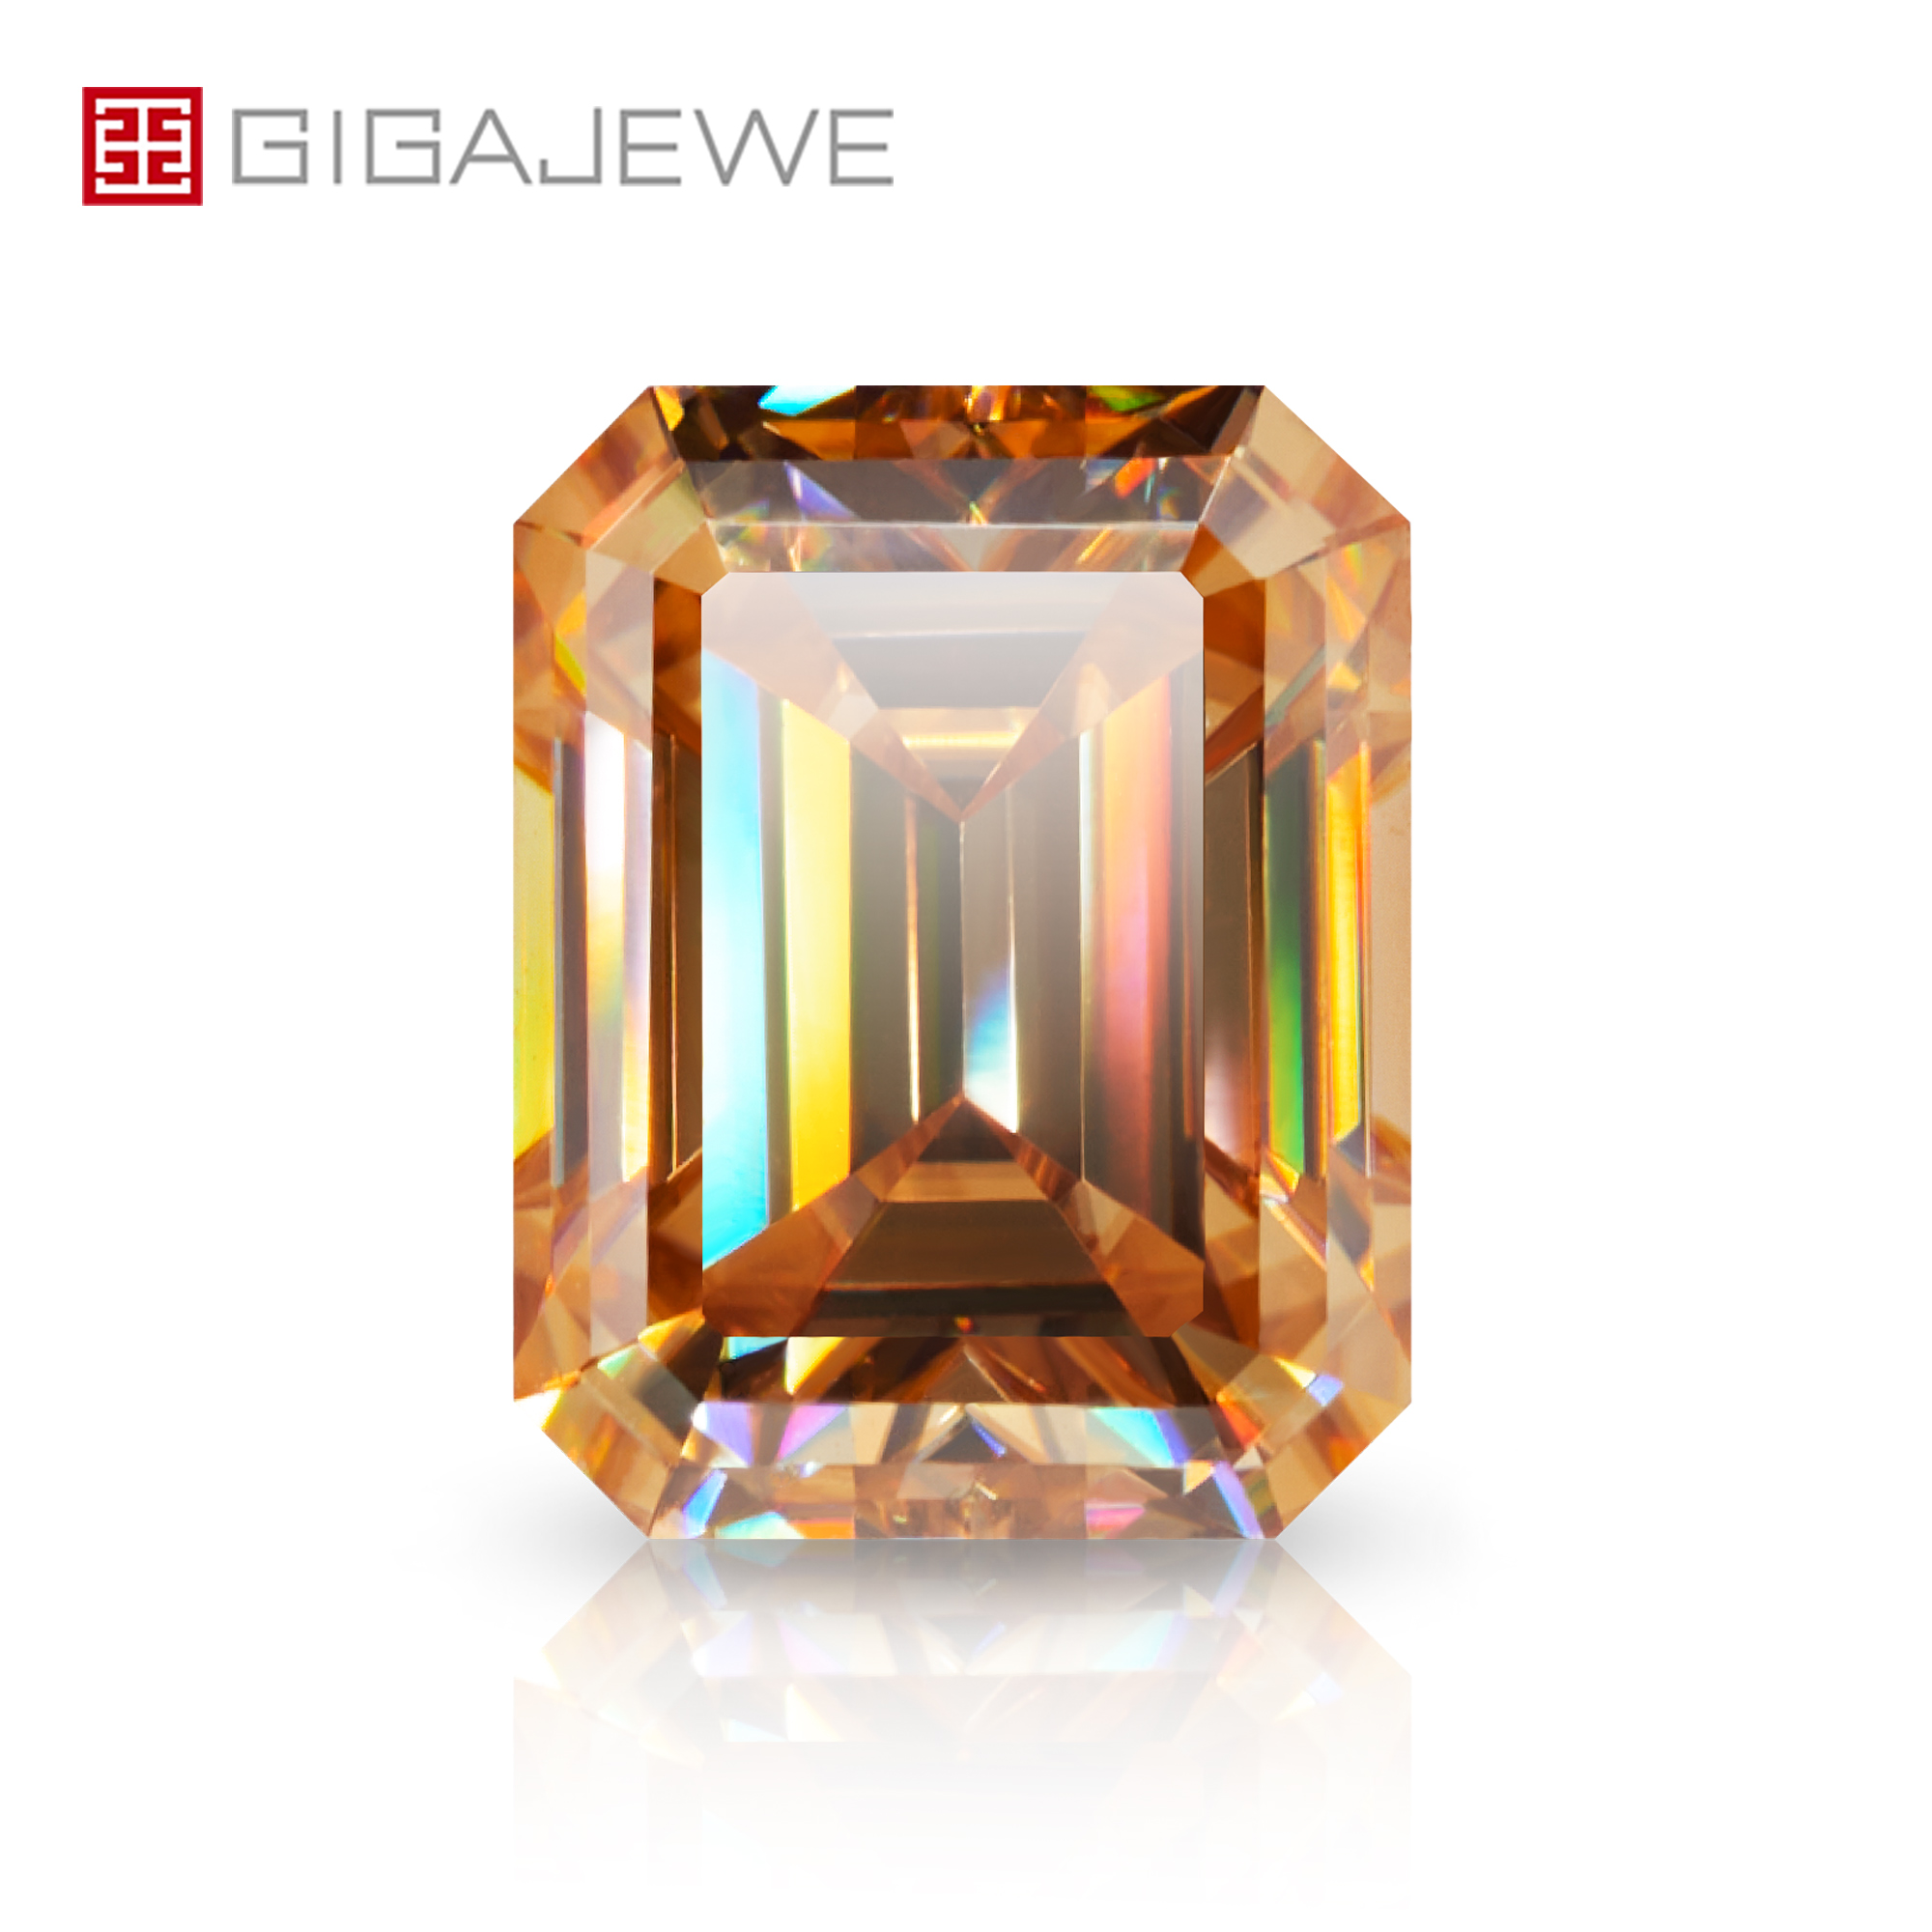 GIGAJEWE 定制祖母绿切割金色 VVS1 莫桑石裸钻测试通过宝石用于珠宝制作